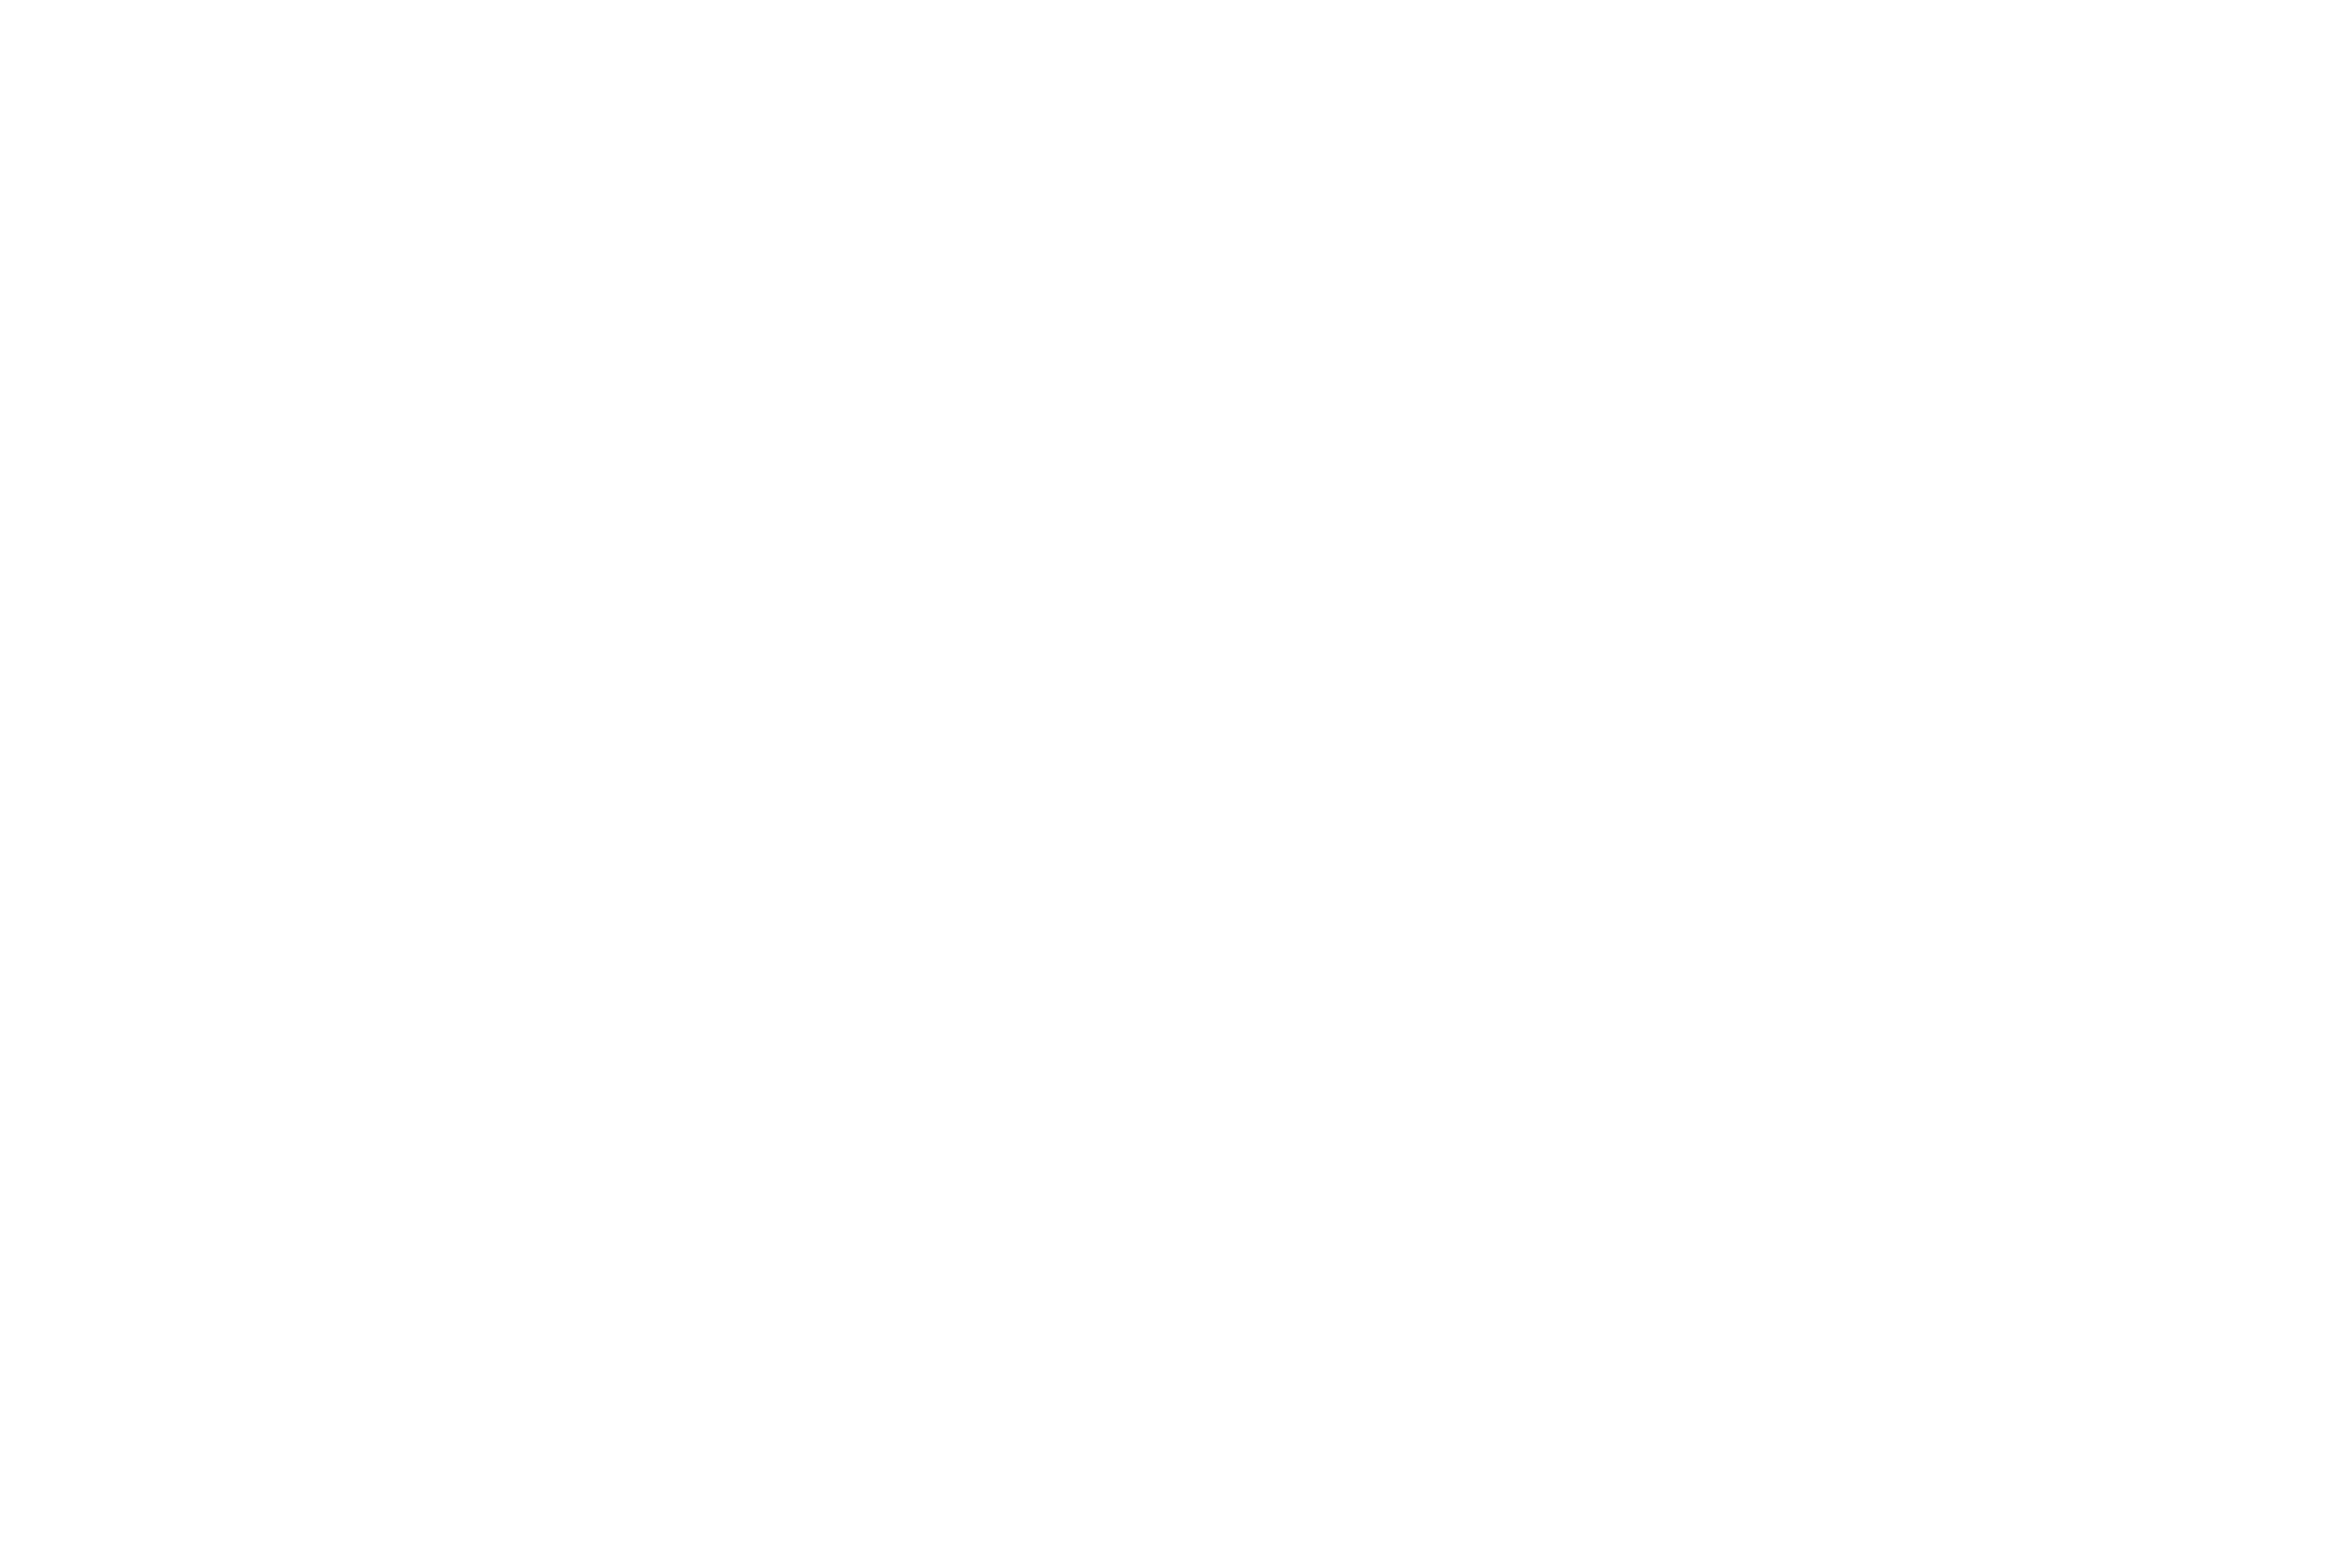 Sean Stemaly